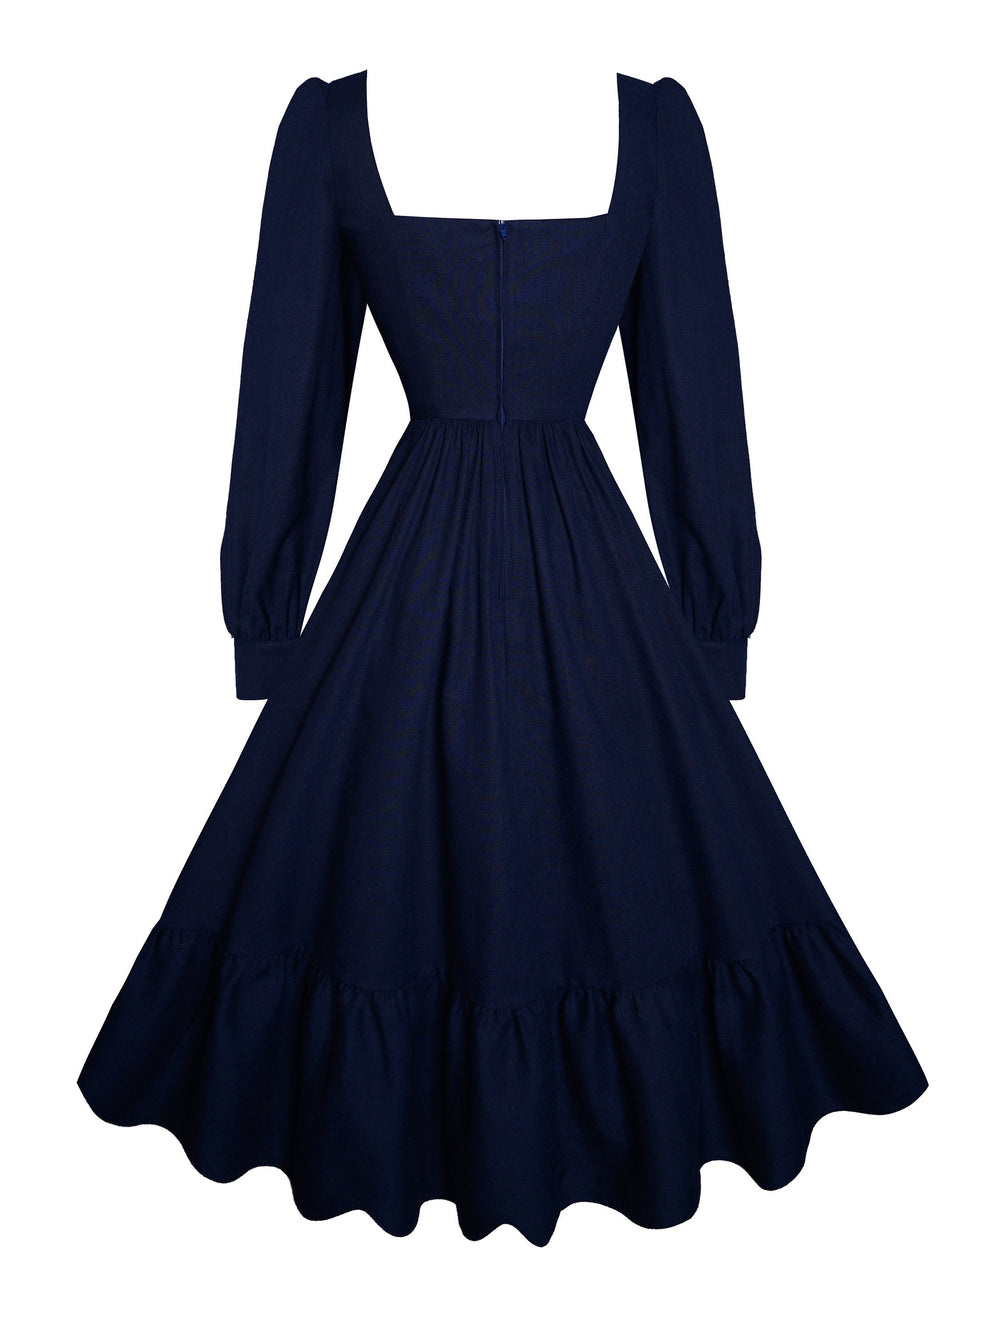 MTO - Mary Dress in Indigo Blue Linen